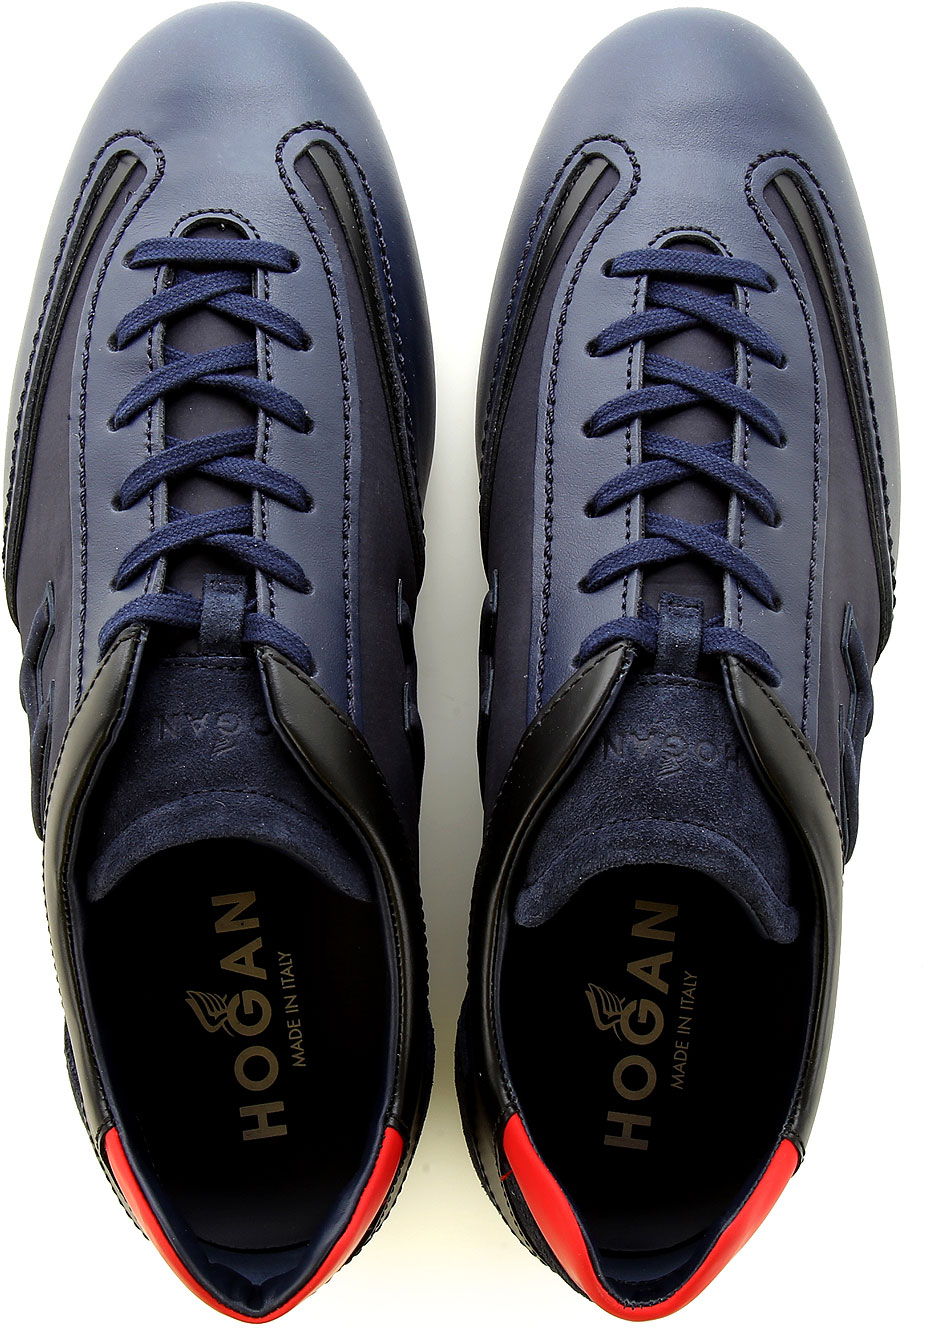 Mens Shoes Hogan, Style code: hxm05201686p9y2rs0--